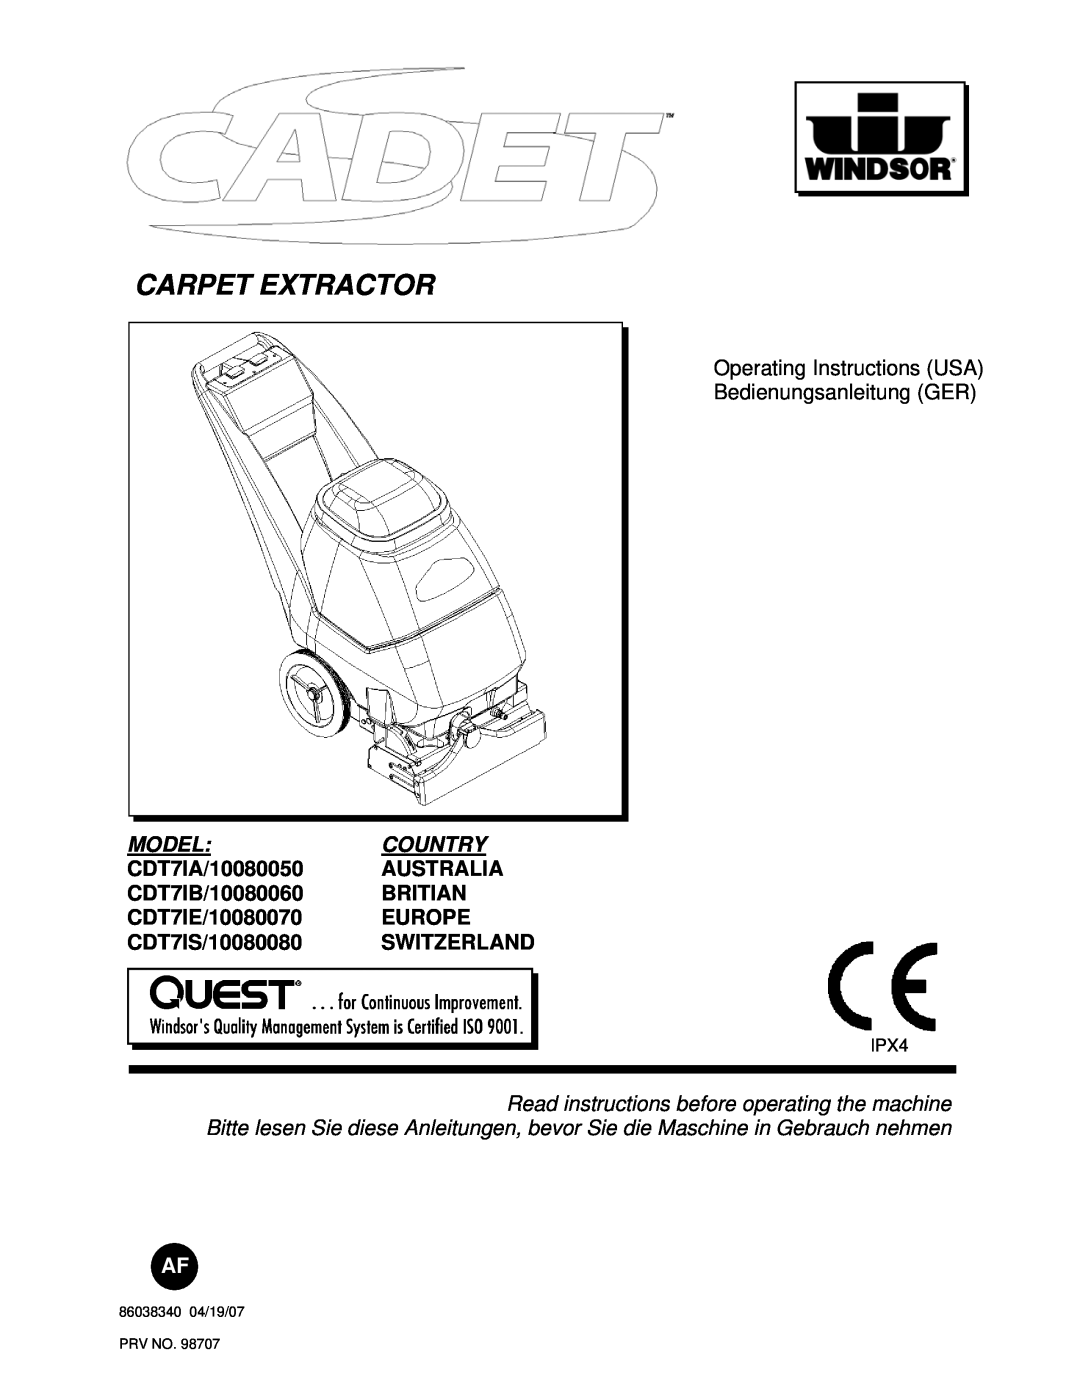 Windsor CDT7IB/10080060, CDT7IE/10080070, CDT7IS/10080080 manual Carpet Extractor, Model Country, 86038340 04/26/11 PRV NO 